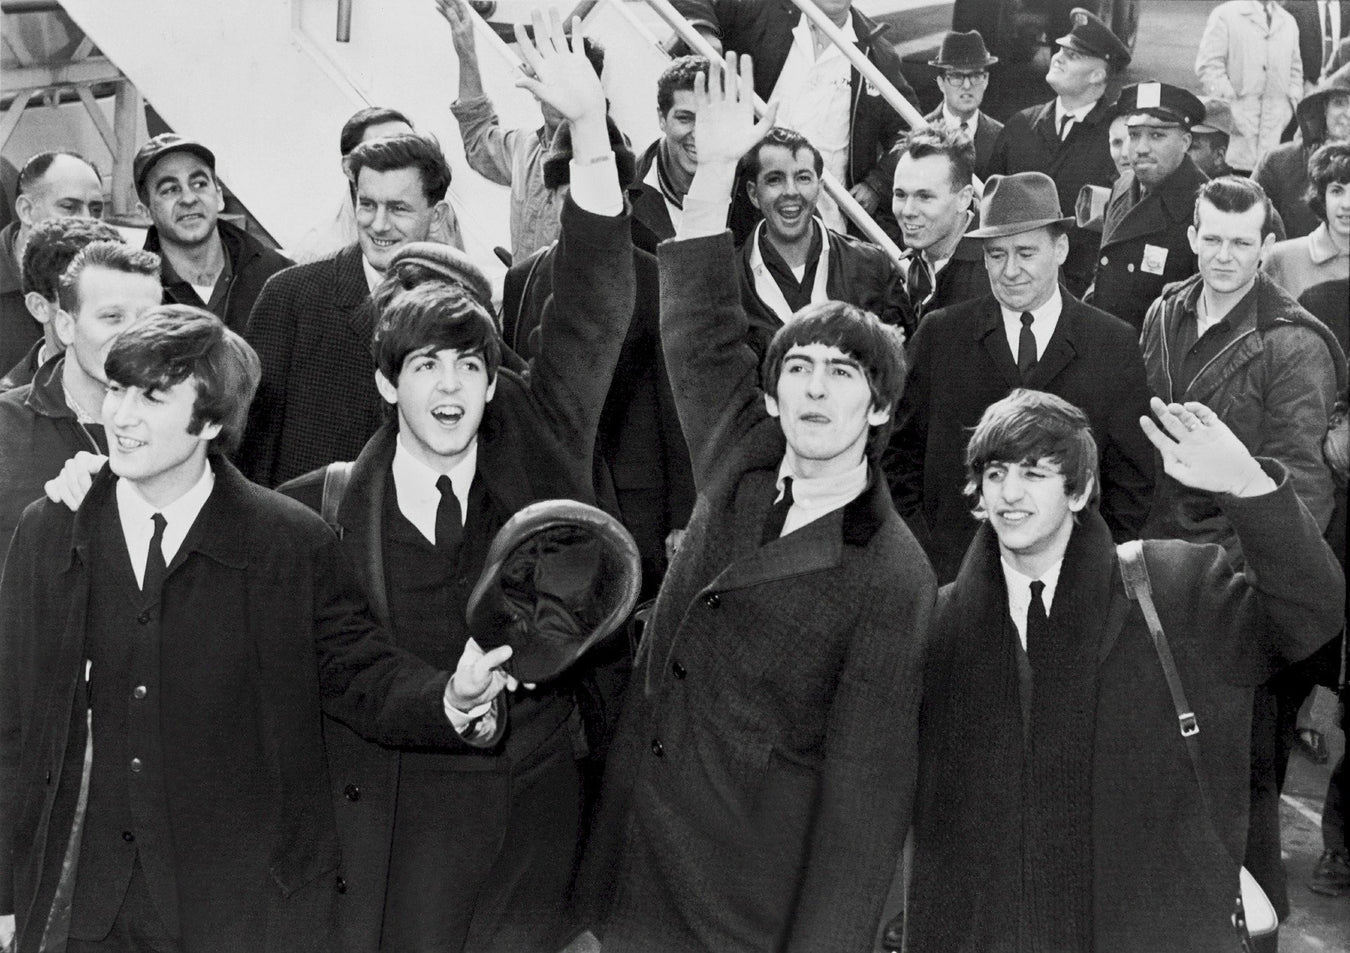 The Beatles Memorabilia Collection for Sale